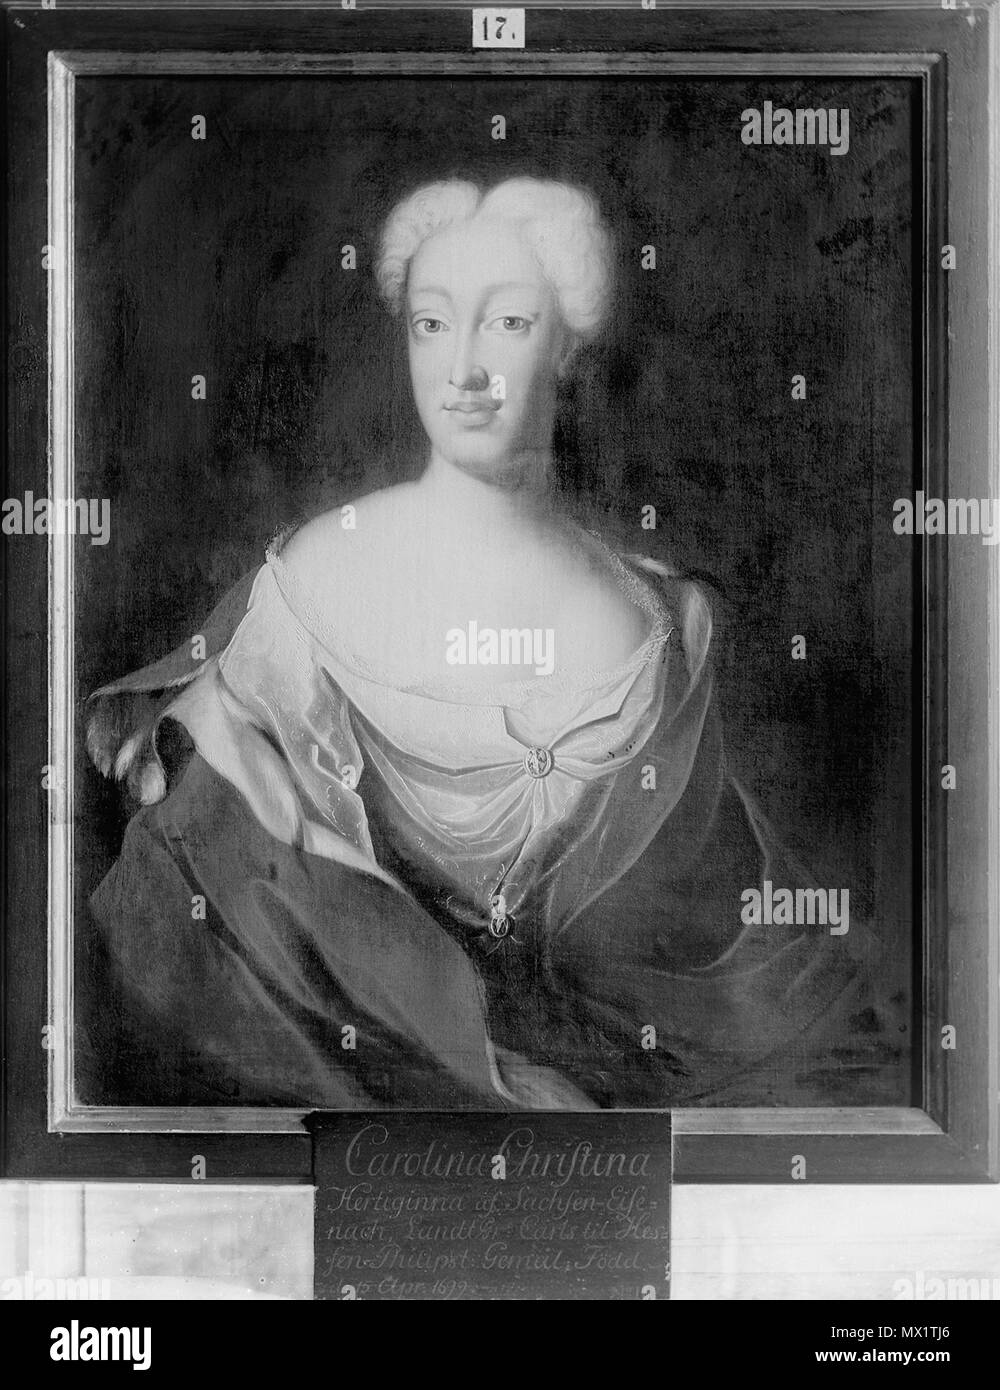 .  Svenska: Karolina Kristina, 1699-1743, prinsessa av Sachsen-Eisenach  . 1726 337 Karolina Kristina, 1699-1743, prinsessa av Sachsen-Eisenach - Nationalmuseum - 14686 Stock Photo